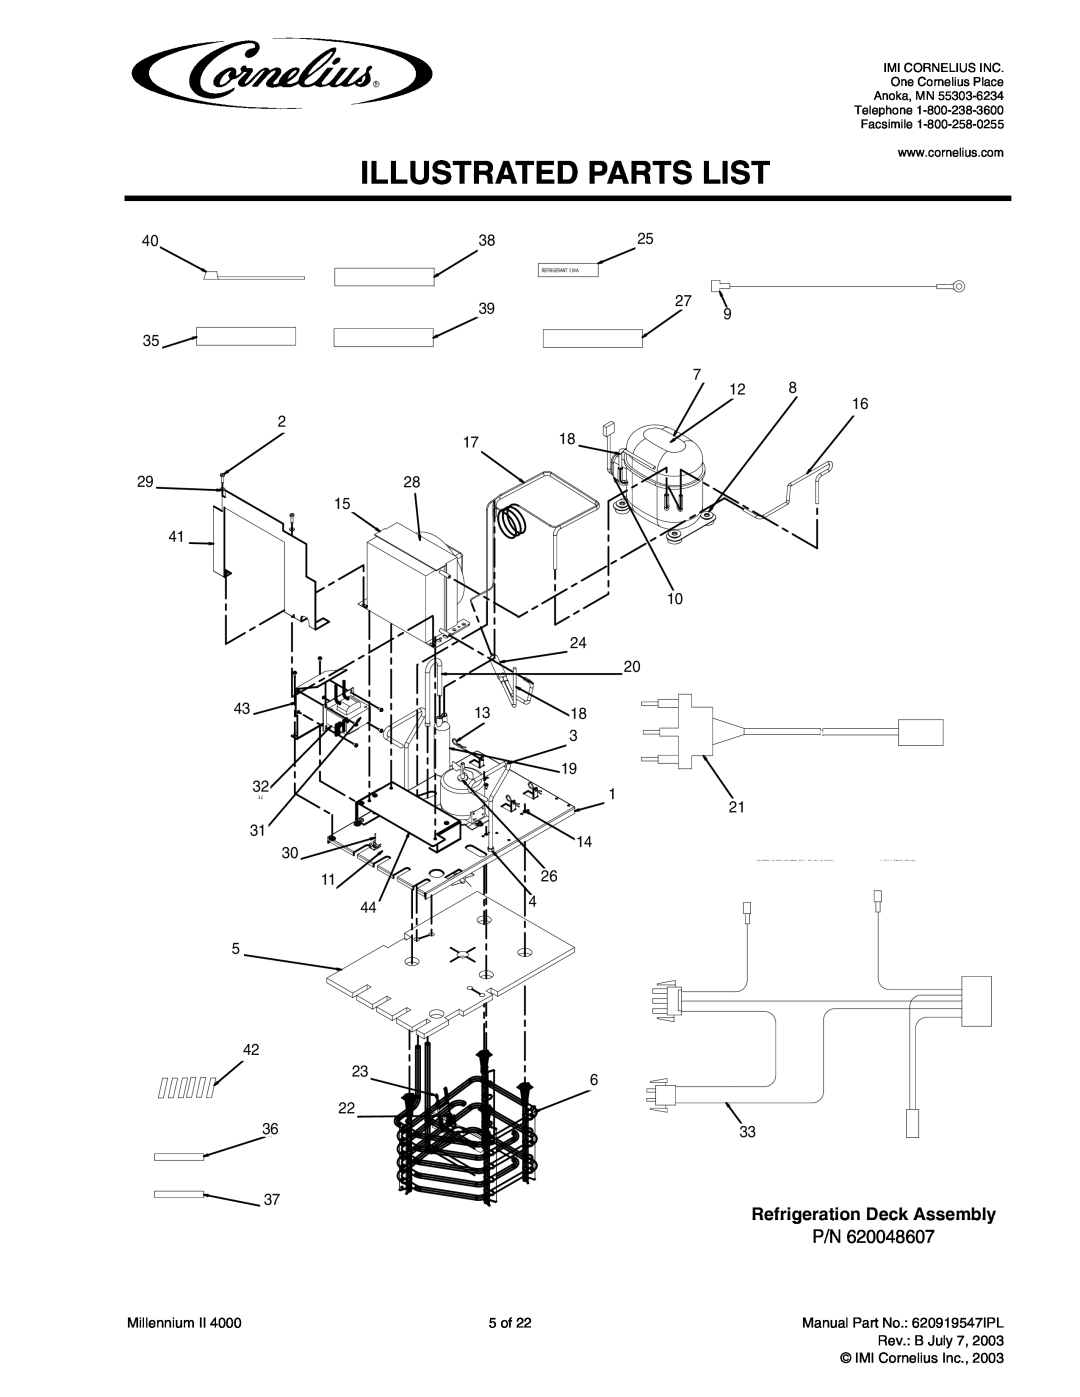 Cornelius MJ31-4 PB Illustrated Parts List, Refrigeration Deck Assembly, 1717, Millennium, 5 of, Rev. B July, 2003 